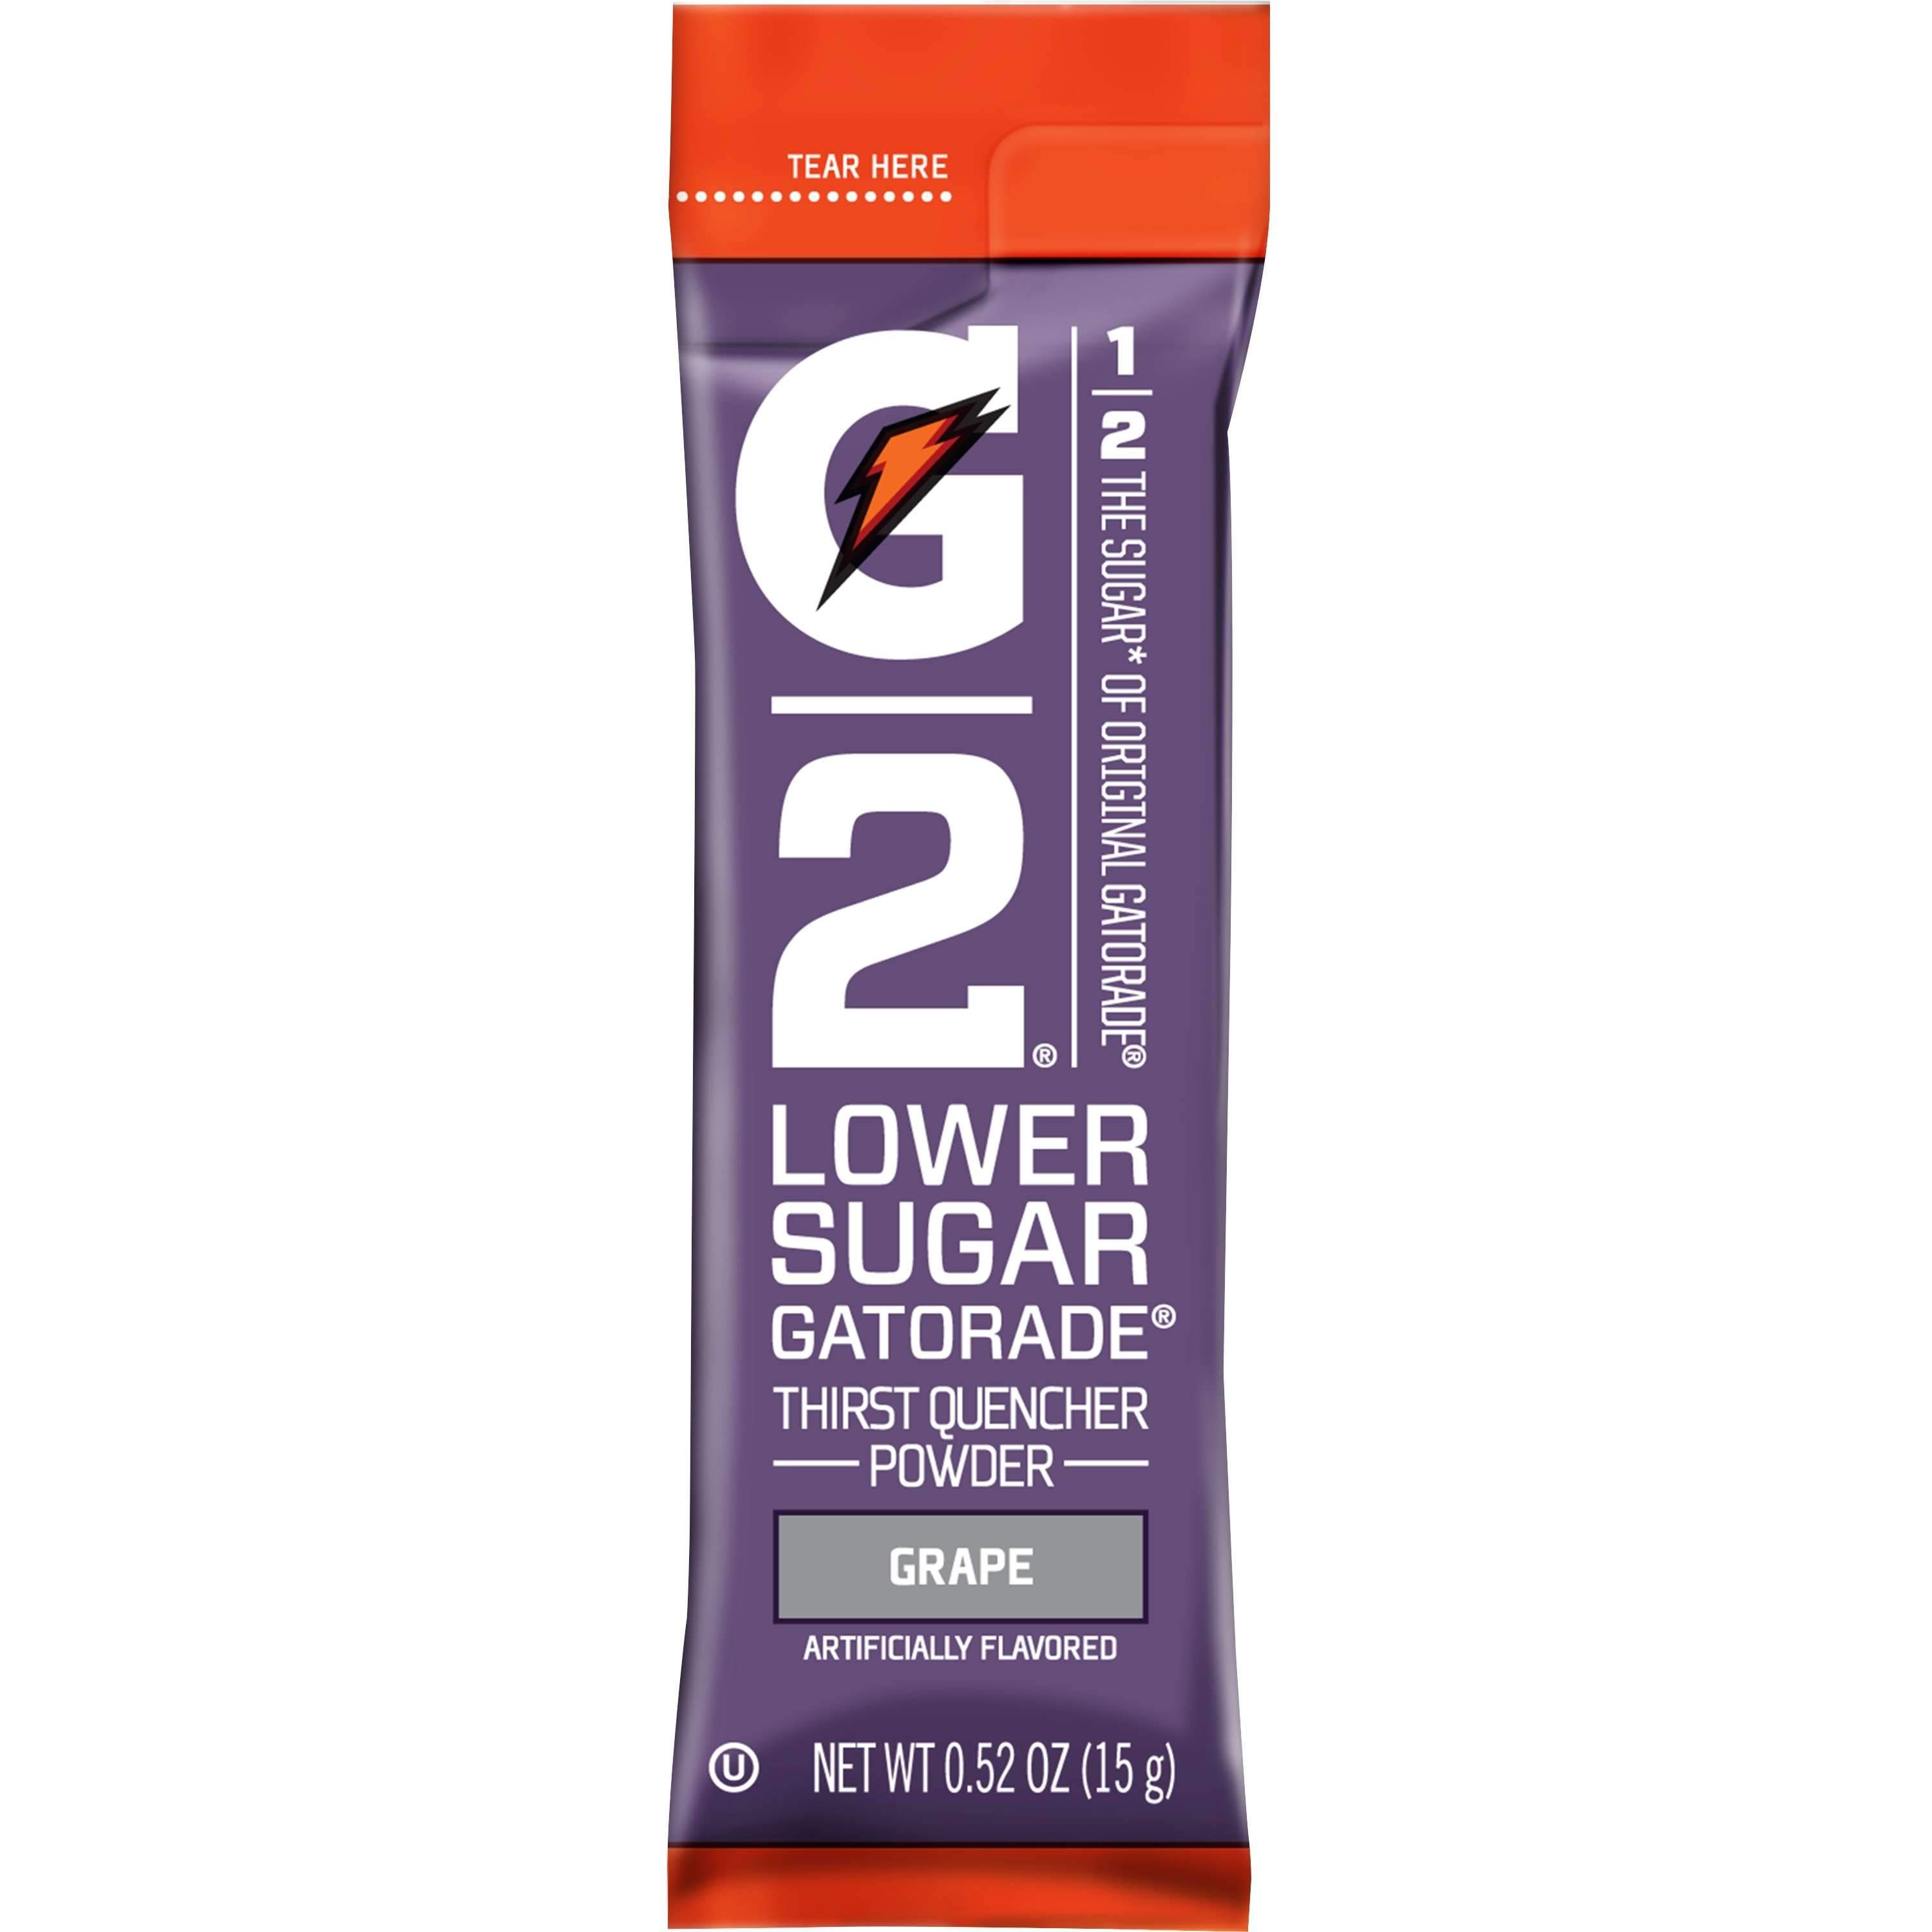 Gatorade Thirst Quencher Powder Packs (Lower Sugar) Gatorade Grape 0.52 Ounce 